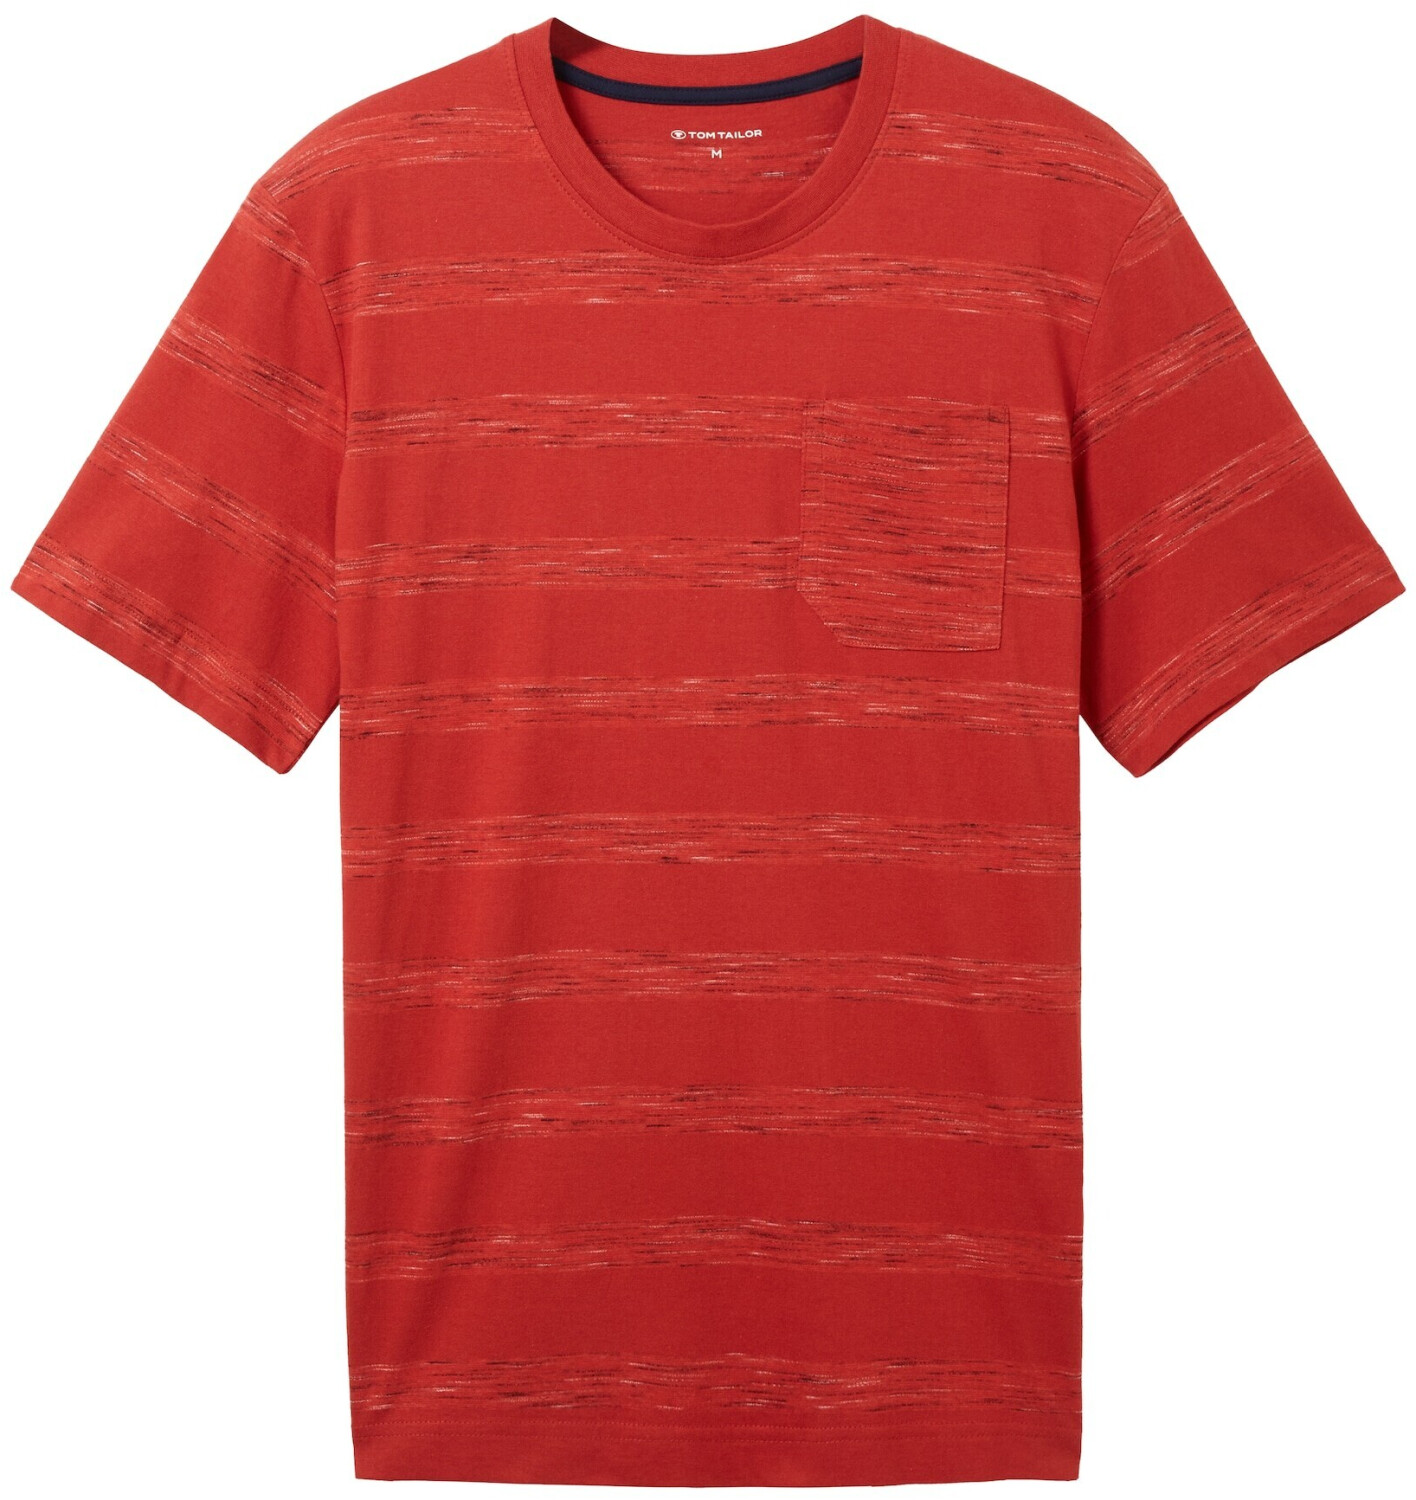 Tom Tailor Gestreiftes T-Shirt (1037832-32436) velvet red | Preisvergleich bei € spacedye 16,89 ab soft